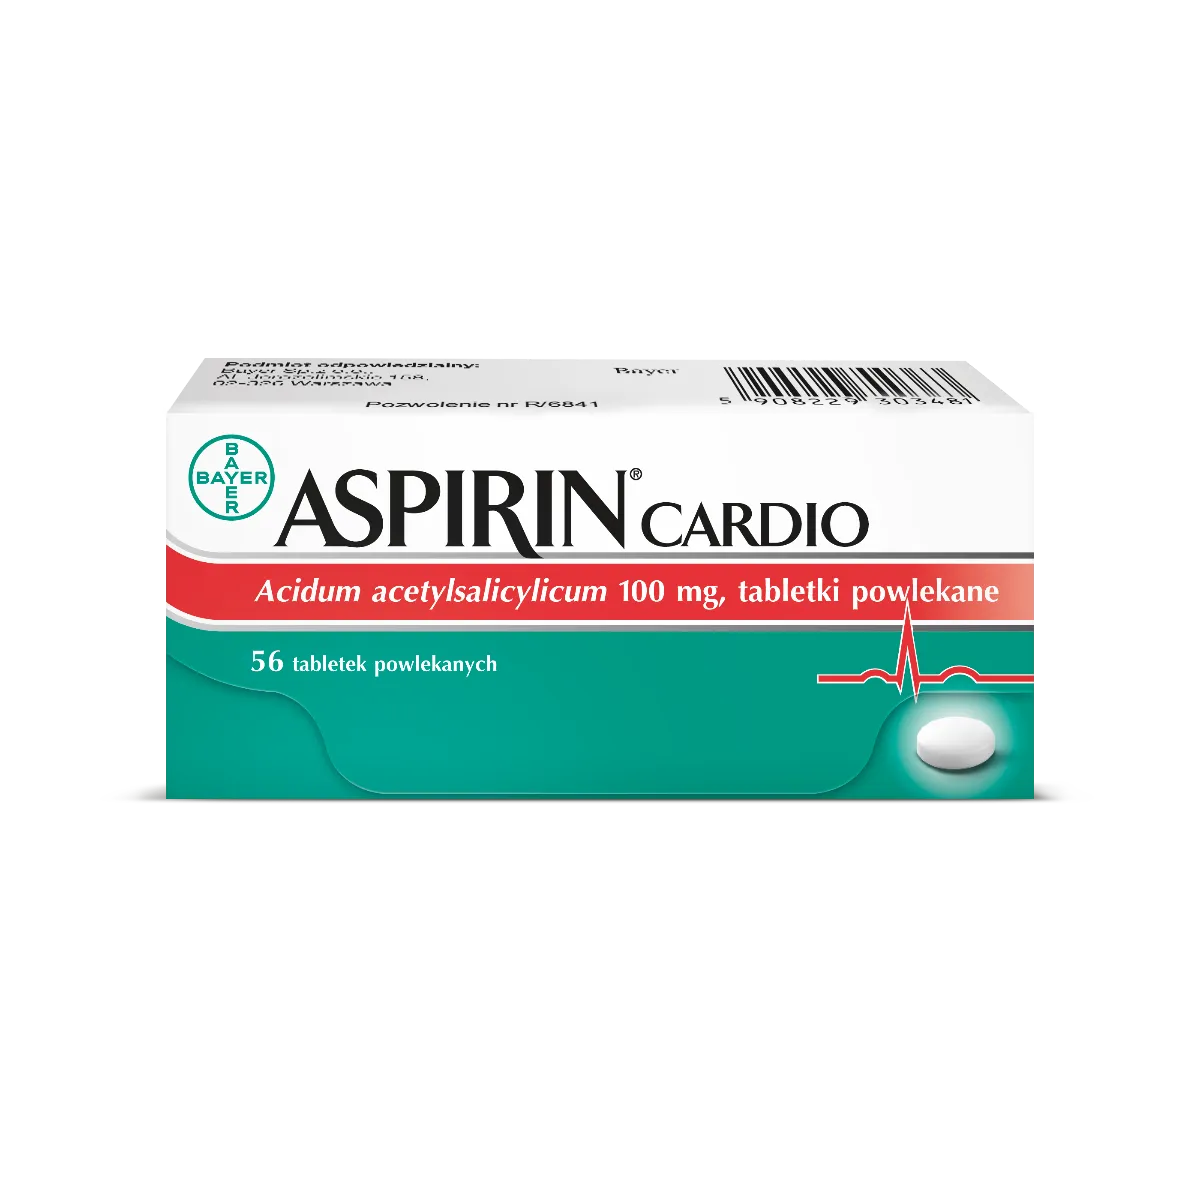 Aspirin Cardio, 100 mg, 56 tabletek powlekanych